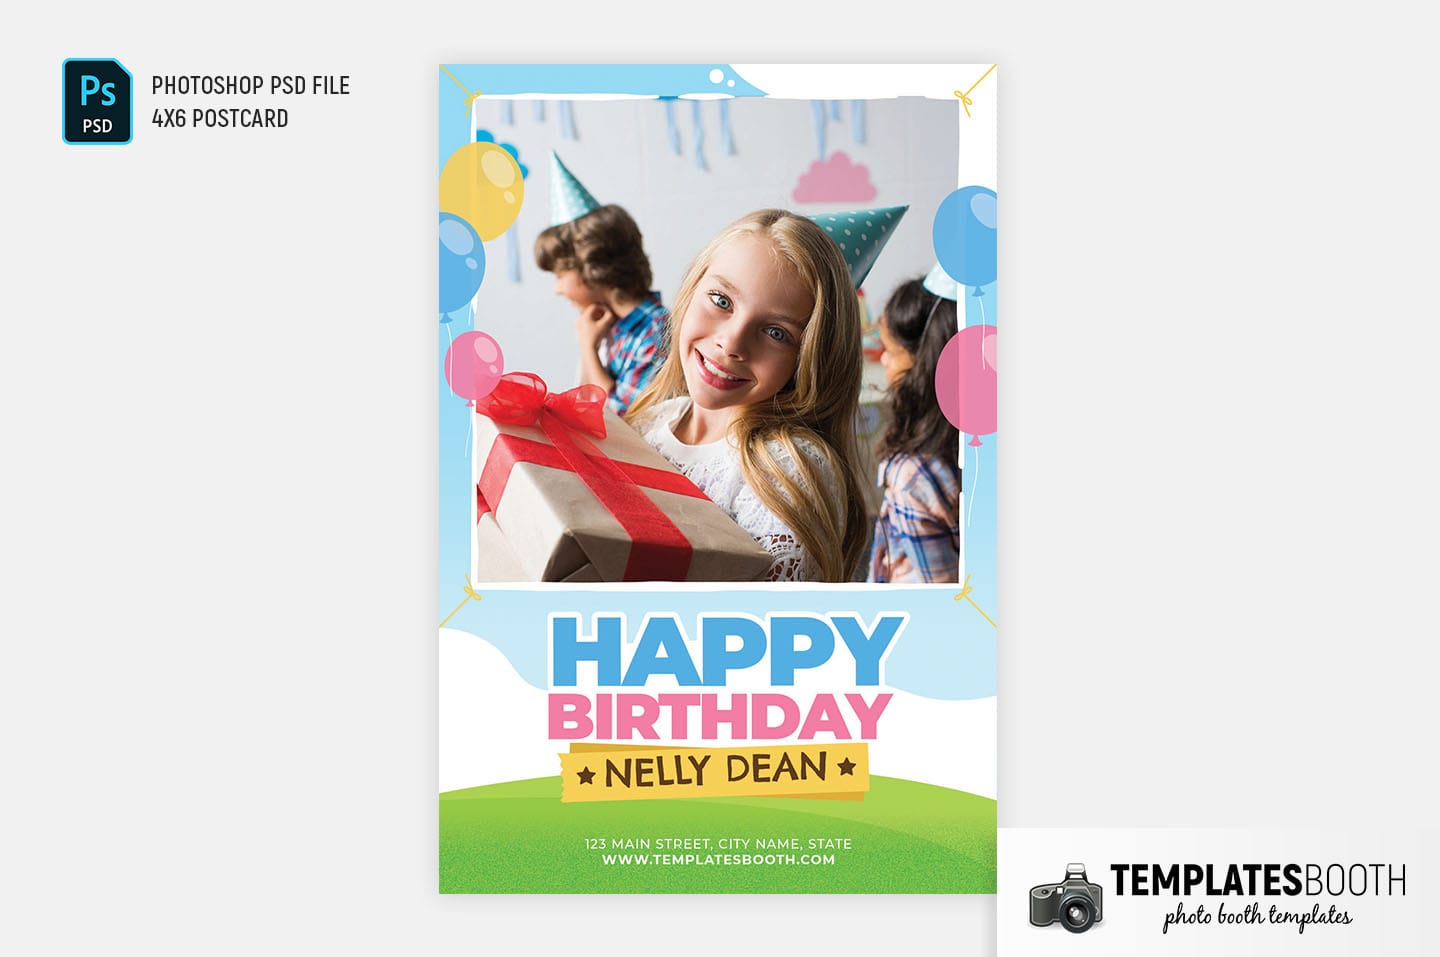 Happy Birthday Photo Booth Template (4x6 Postcard)